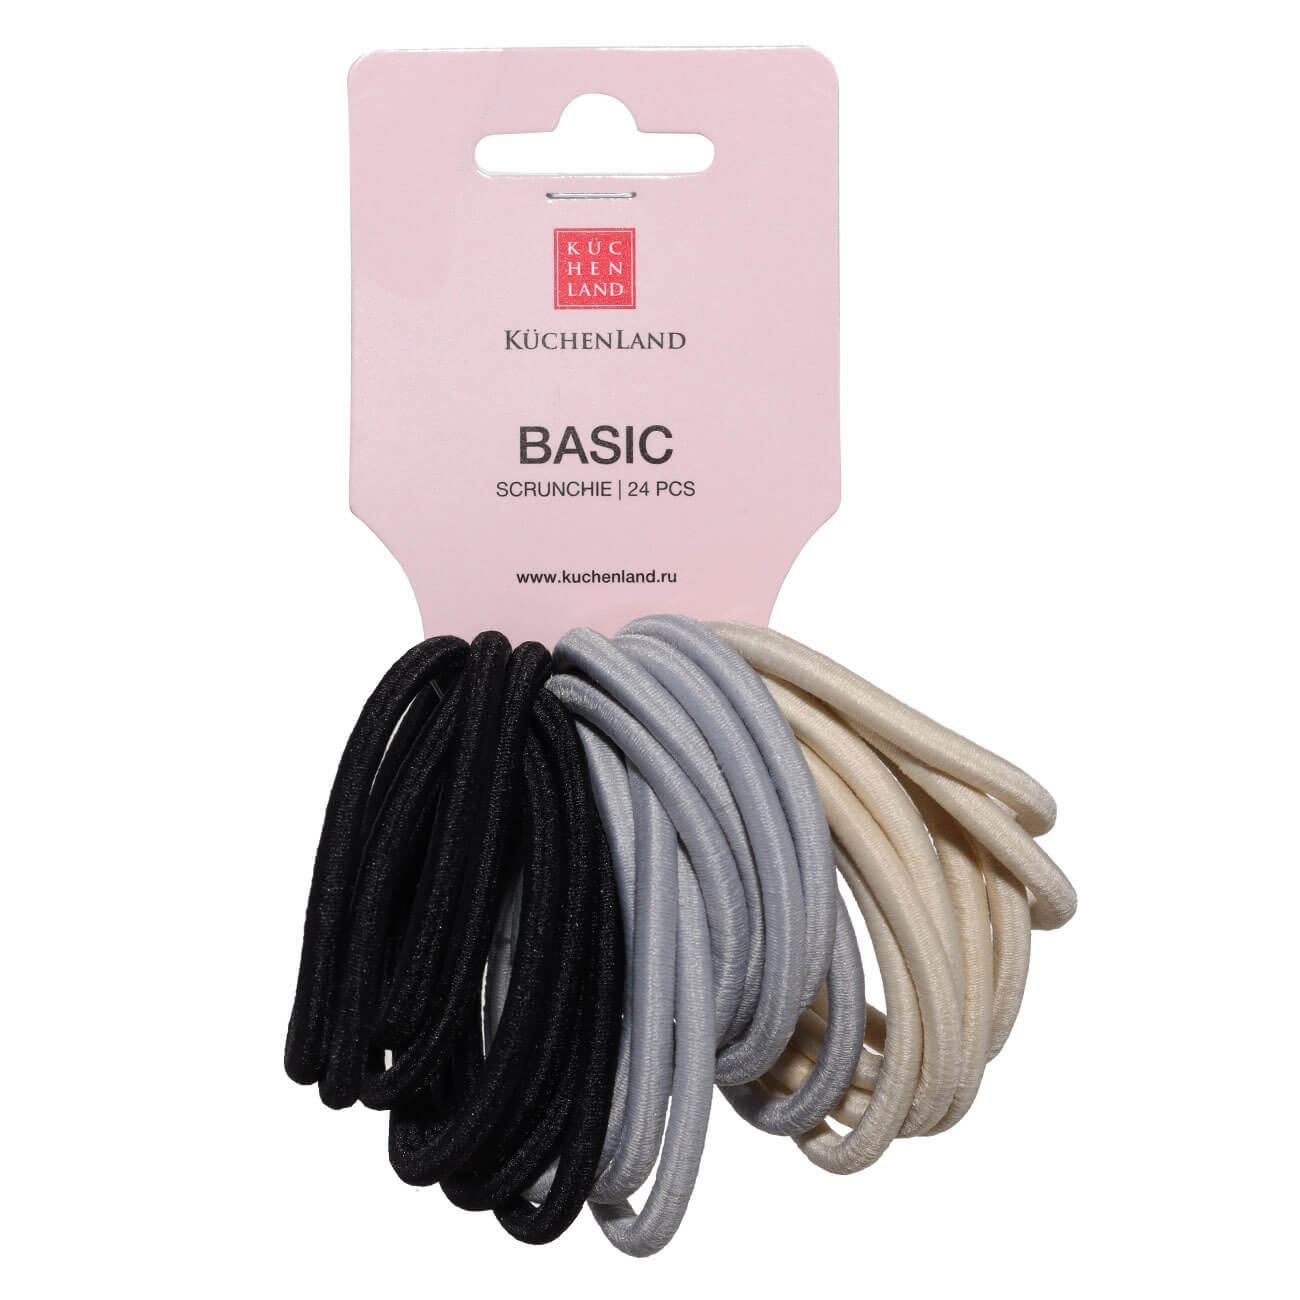 Elastic band for hair, 5 cm, 24 pcs, polyester, black/gray / beige, Basic изображение № 1